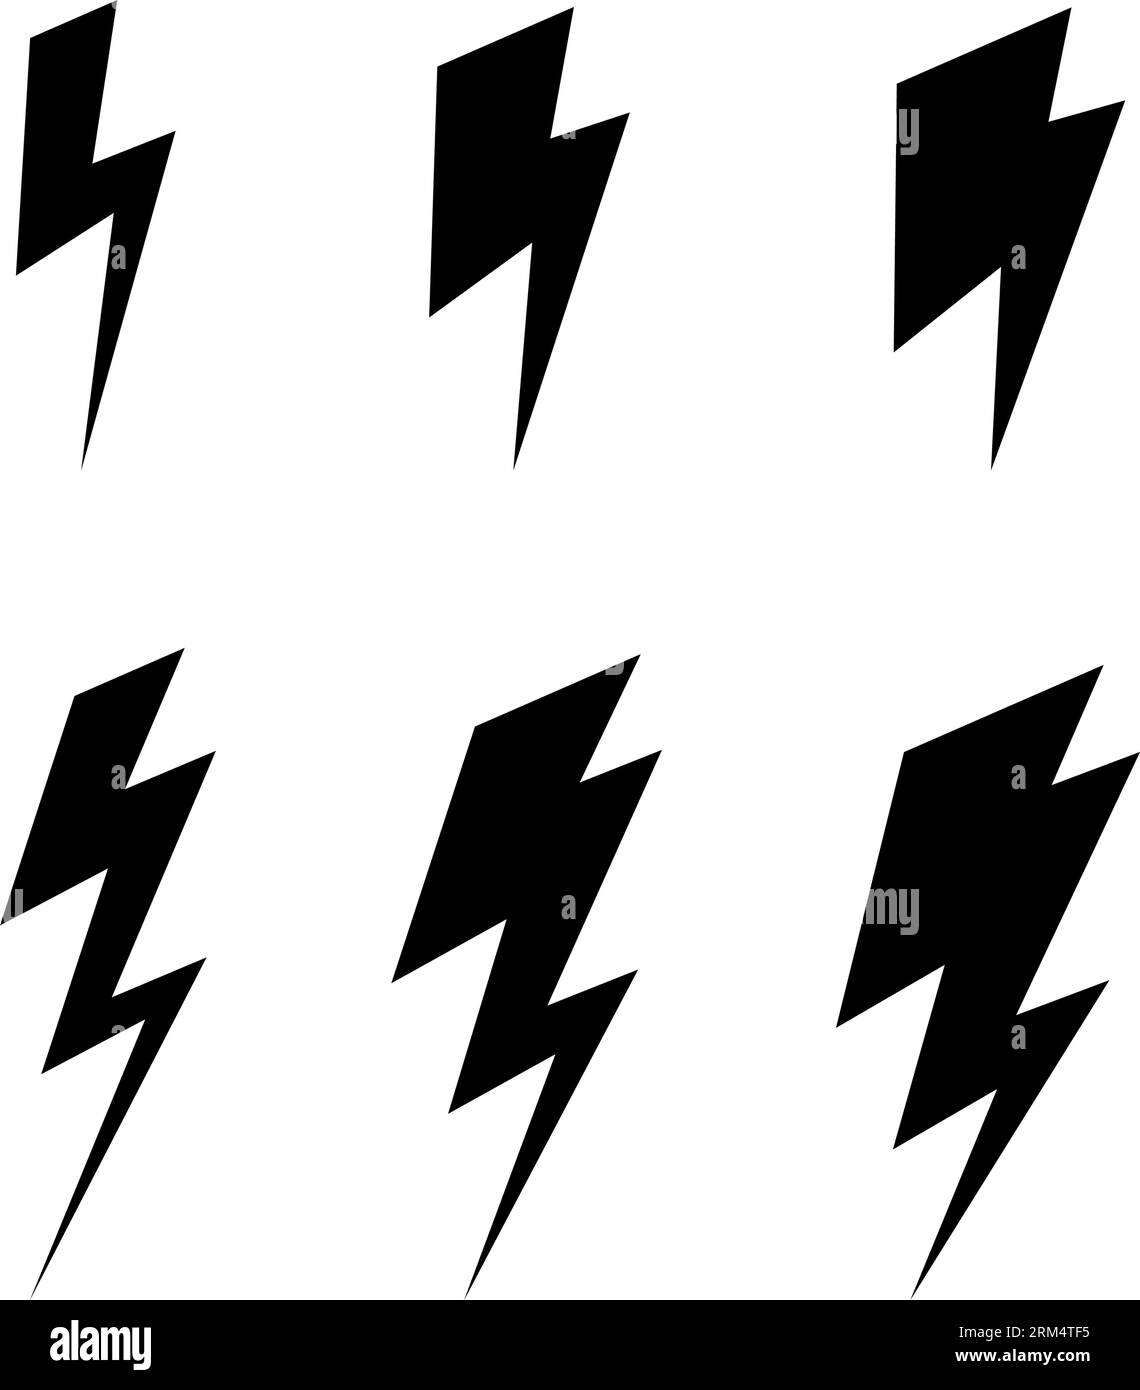 Black Lightning Bolt Icons. Simple Icon Storm or Thunder and Lightning strike. Flash Symbol, Thunderbolt. Simple Cartoon Lightning Strike Sign on Whit Stock Vector